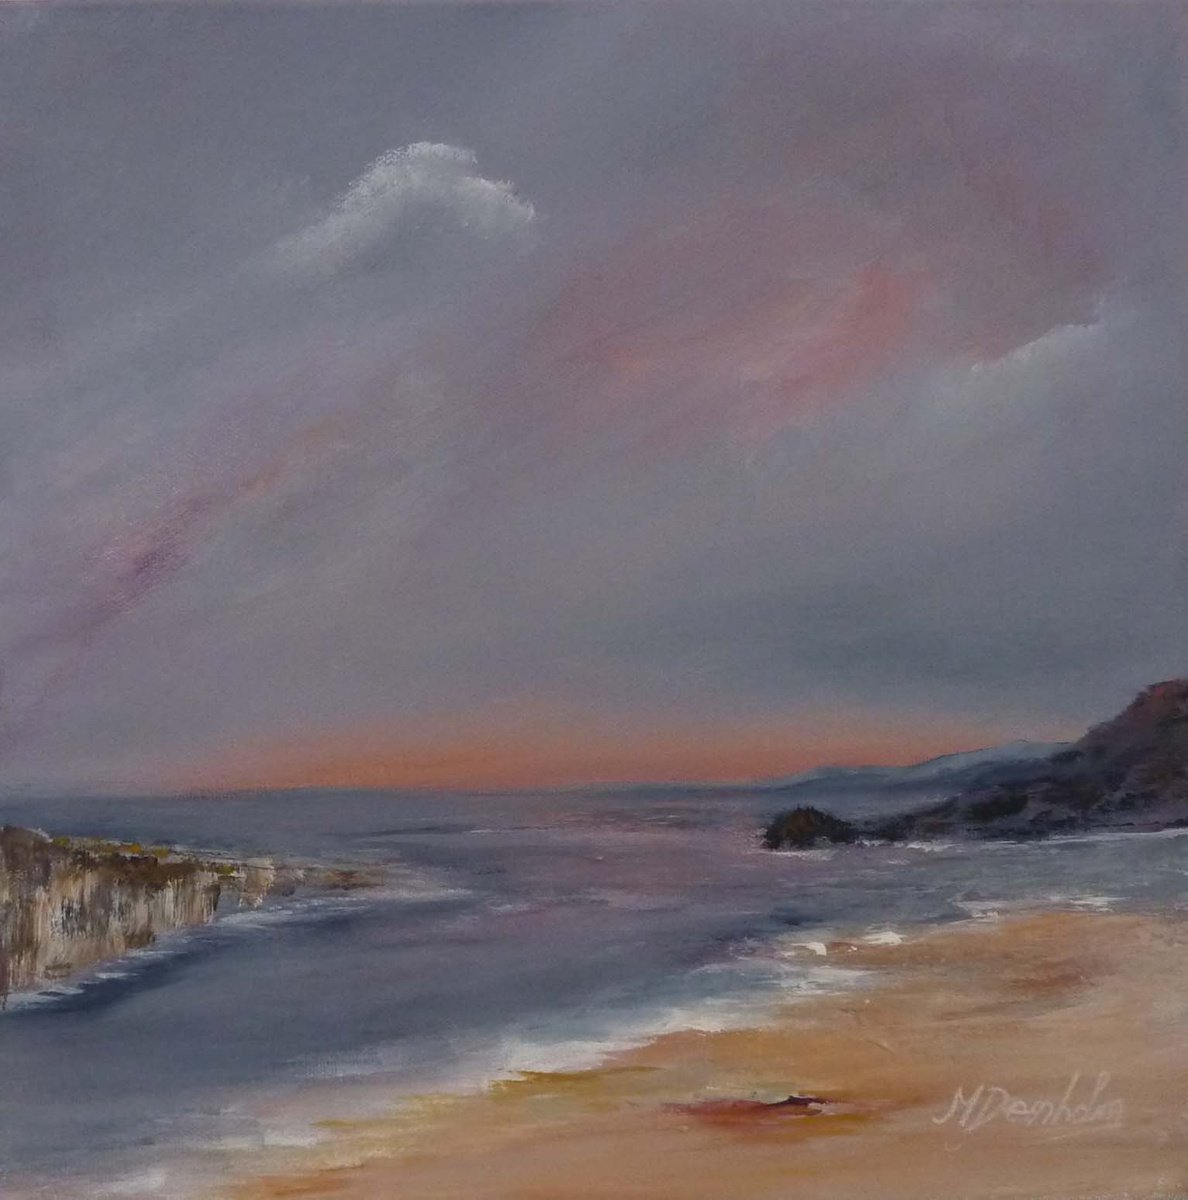 Winter Sunset At The Seashore by Margaret Denholm